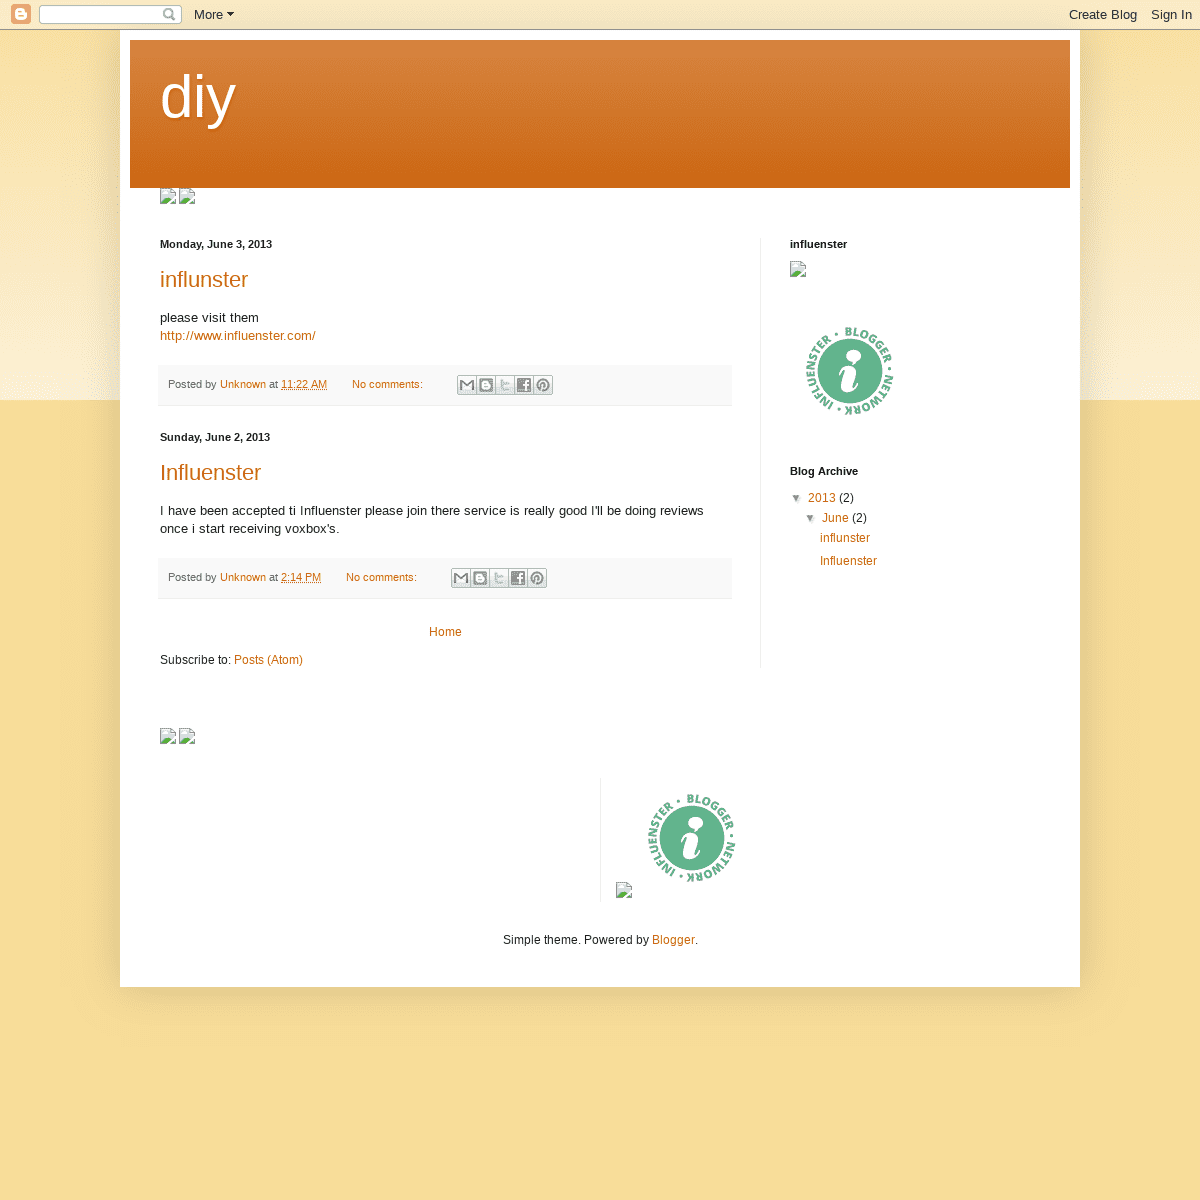 A complete backup of diyorbuyit.blogspot.com